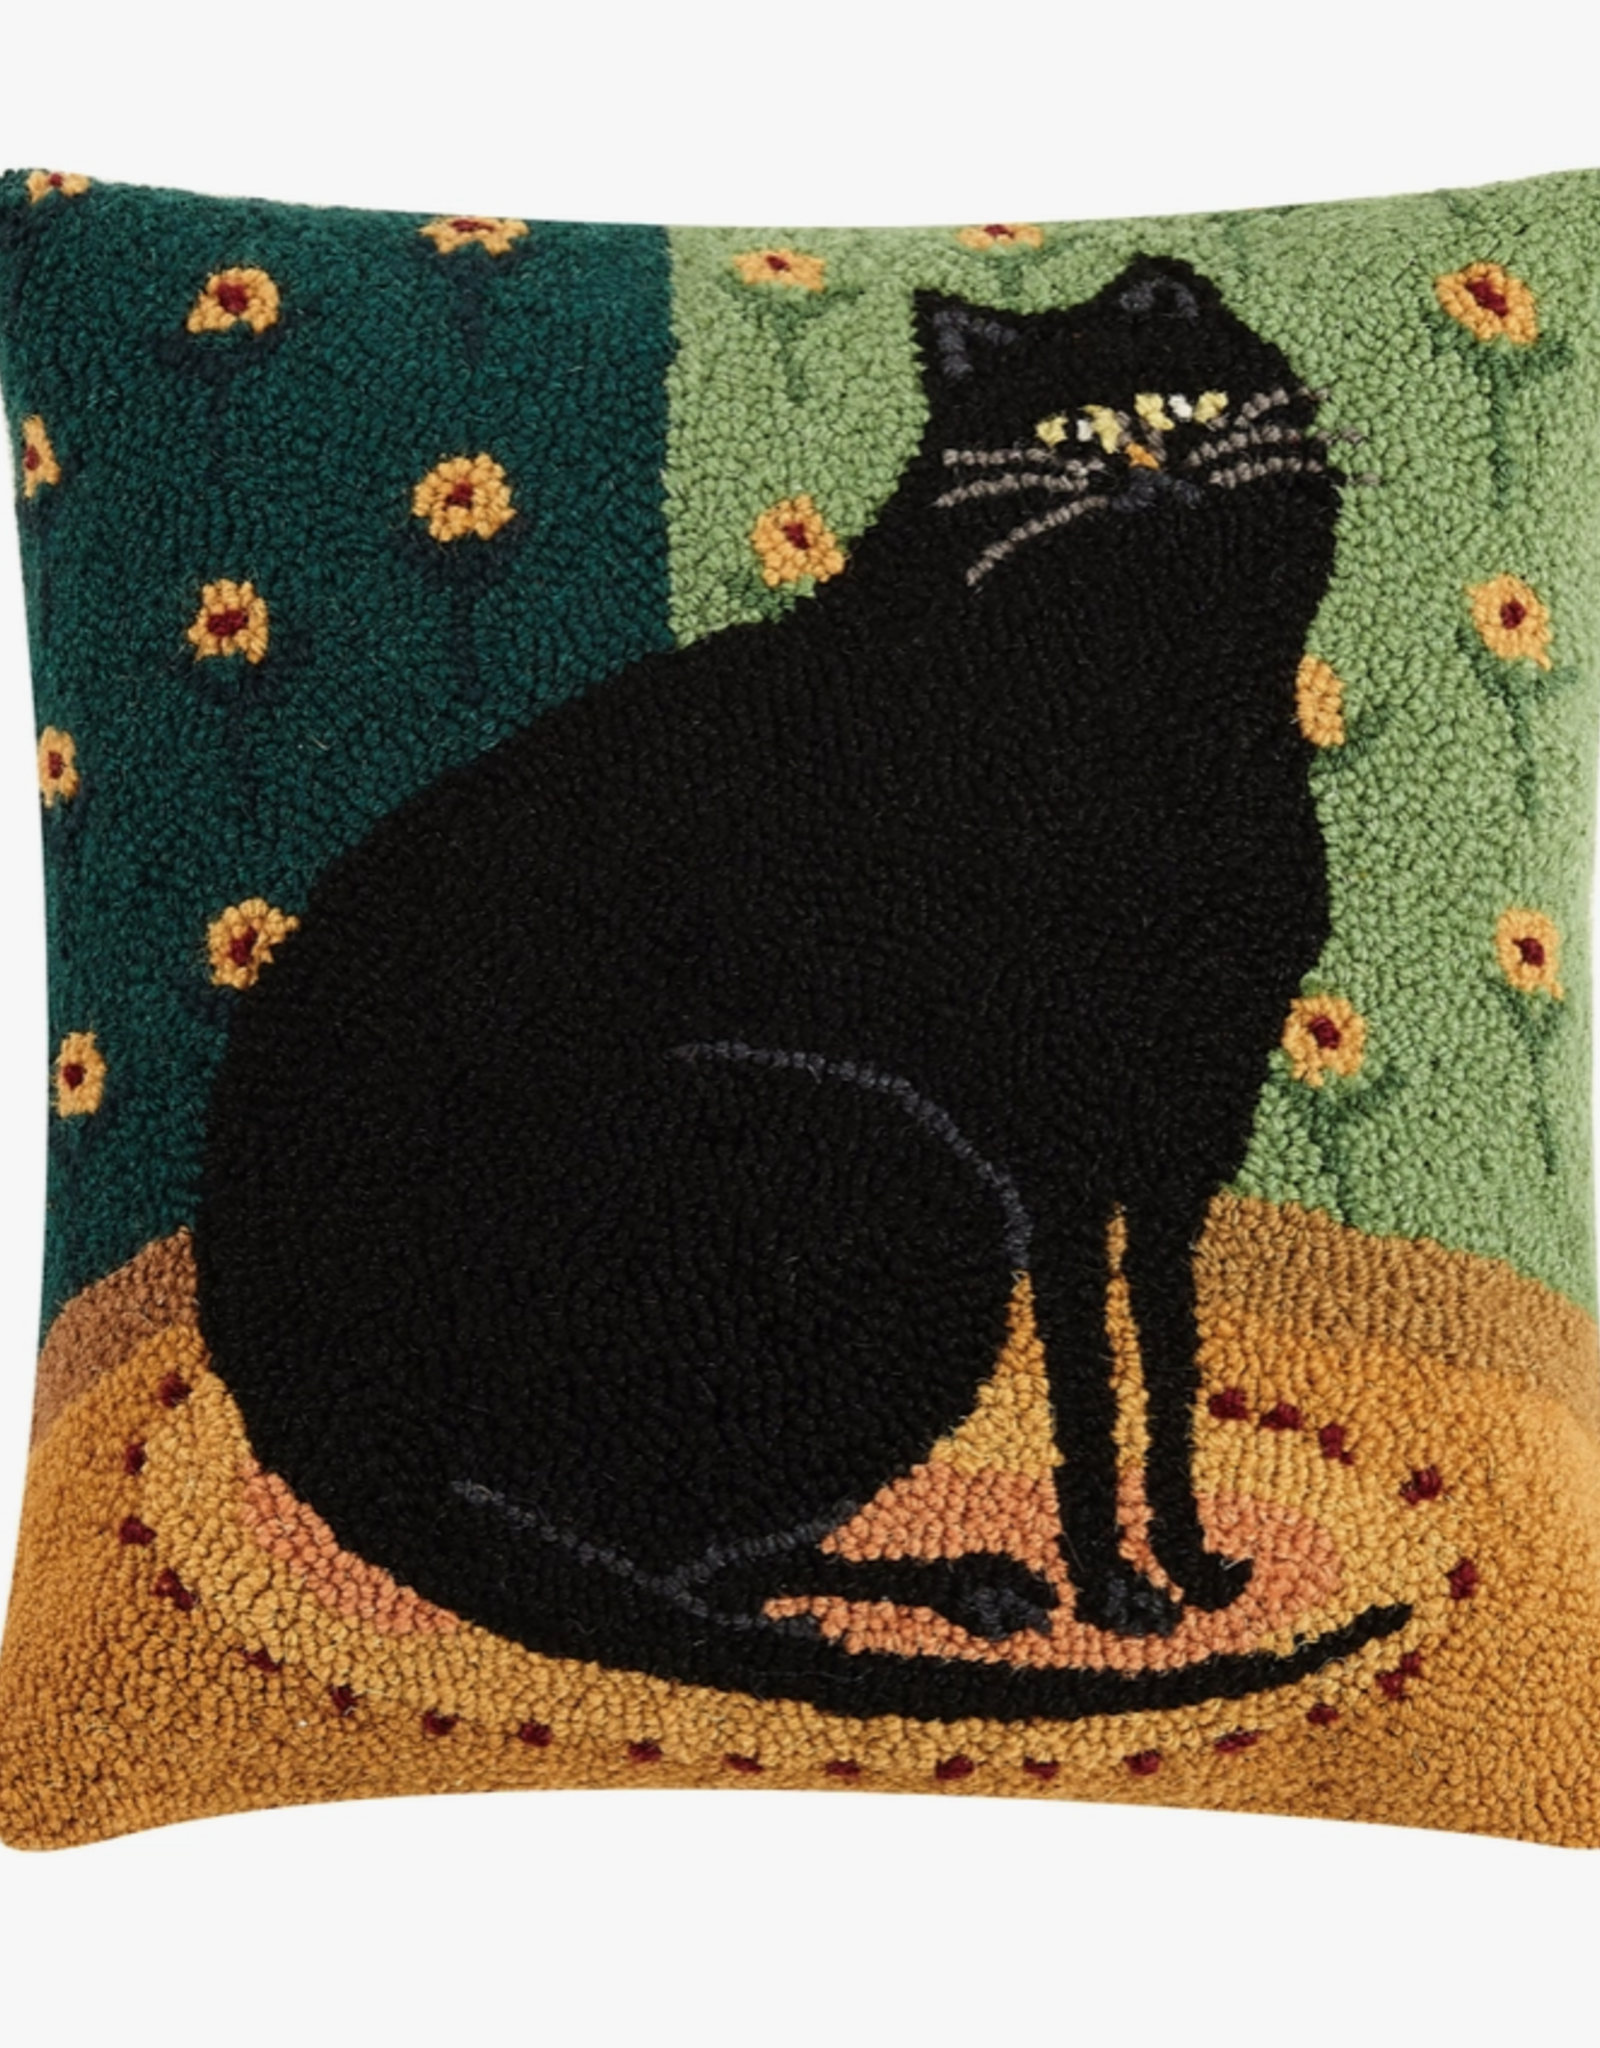 Peking Handicraft -Black Cat In A Corner Hook Pillow